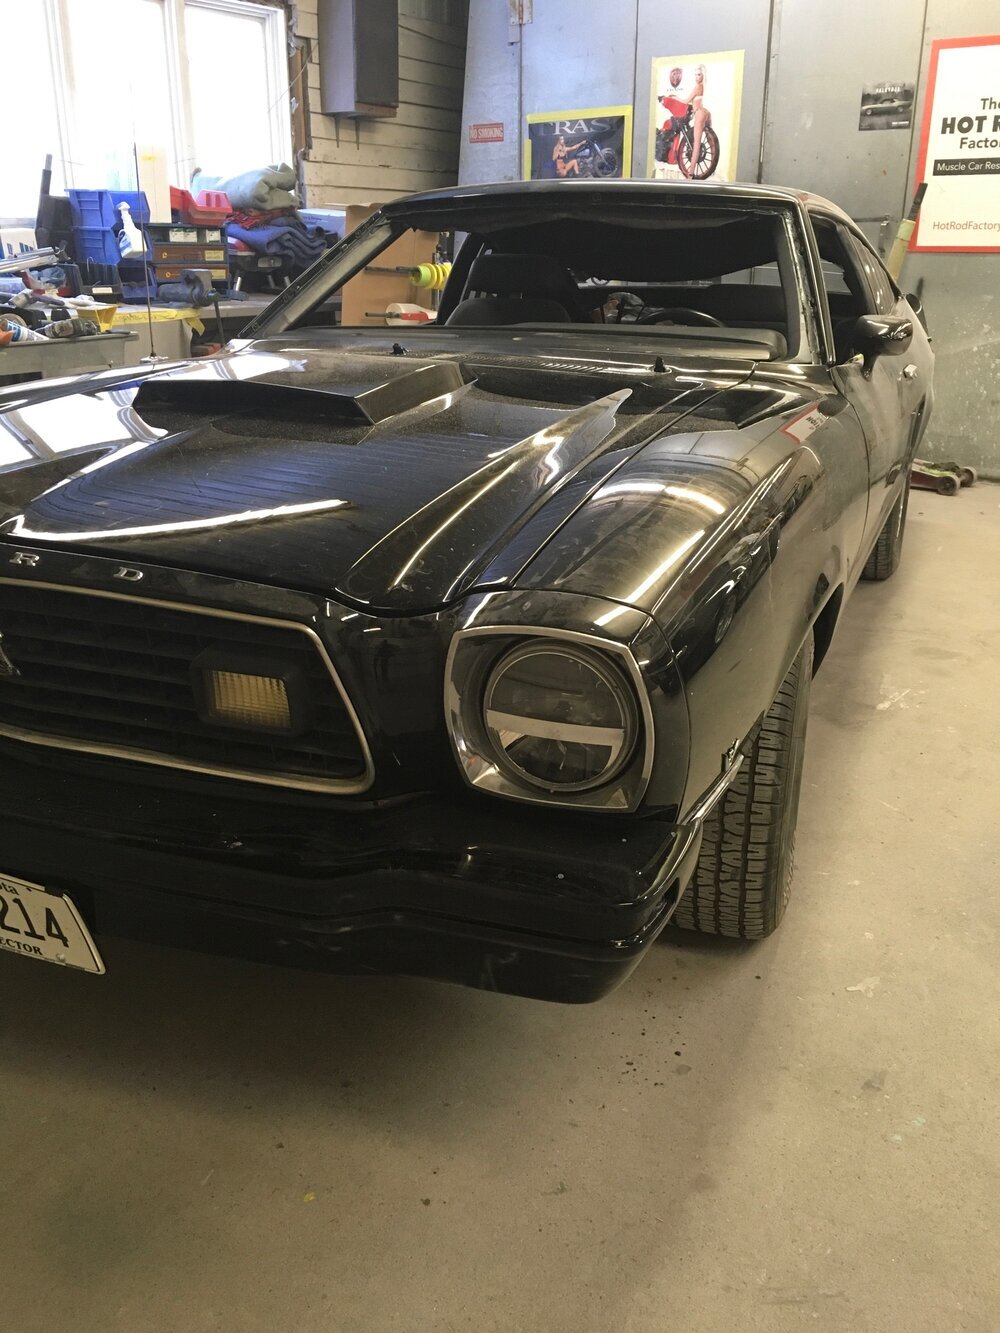 1976-Mustang-car-restoration-hot-rod-factory-cars-rebuild (1).jpeg